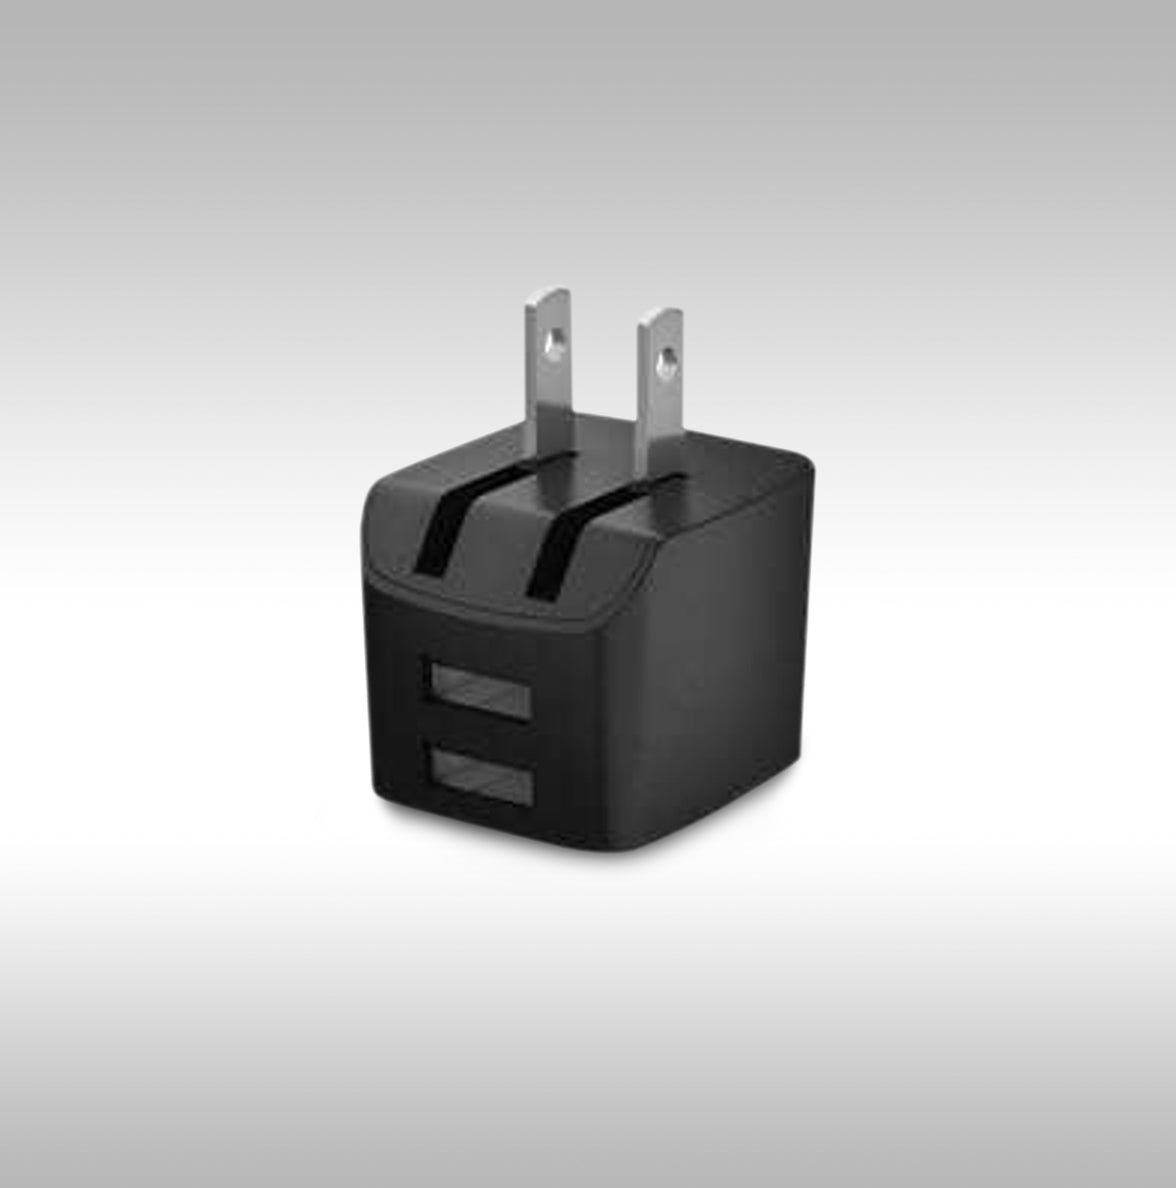 GARMIN DUAL PORT USB POWER ADAPTER (USB-A) - Upshift Online Inc.